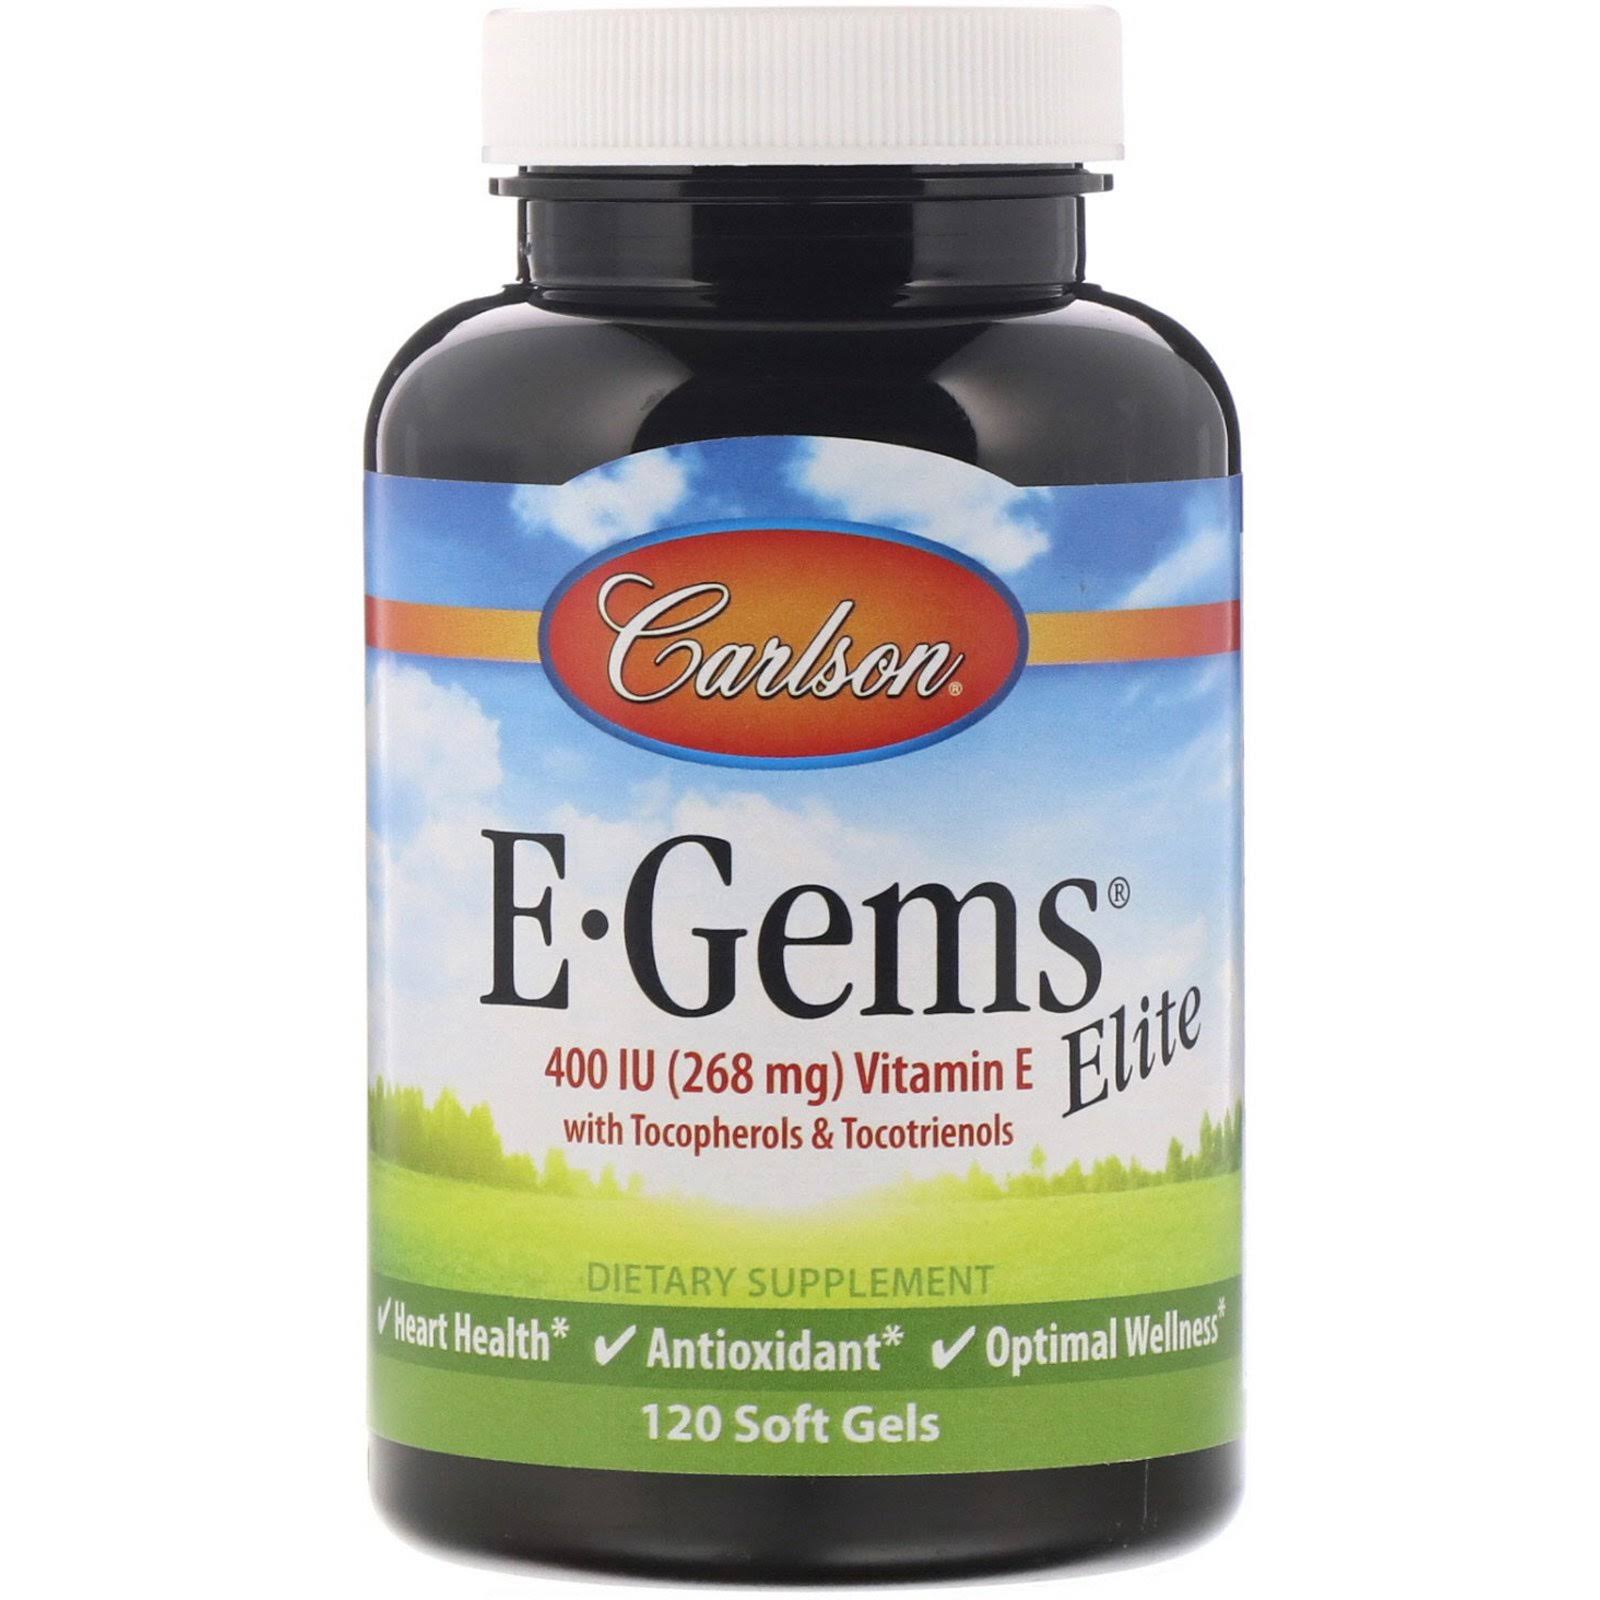 Carlson Labs E-Gems Elite Natural Vitamin E 400 IU Supplement - 120 Softgels